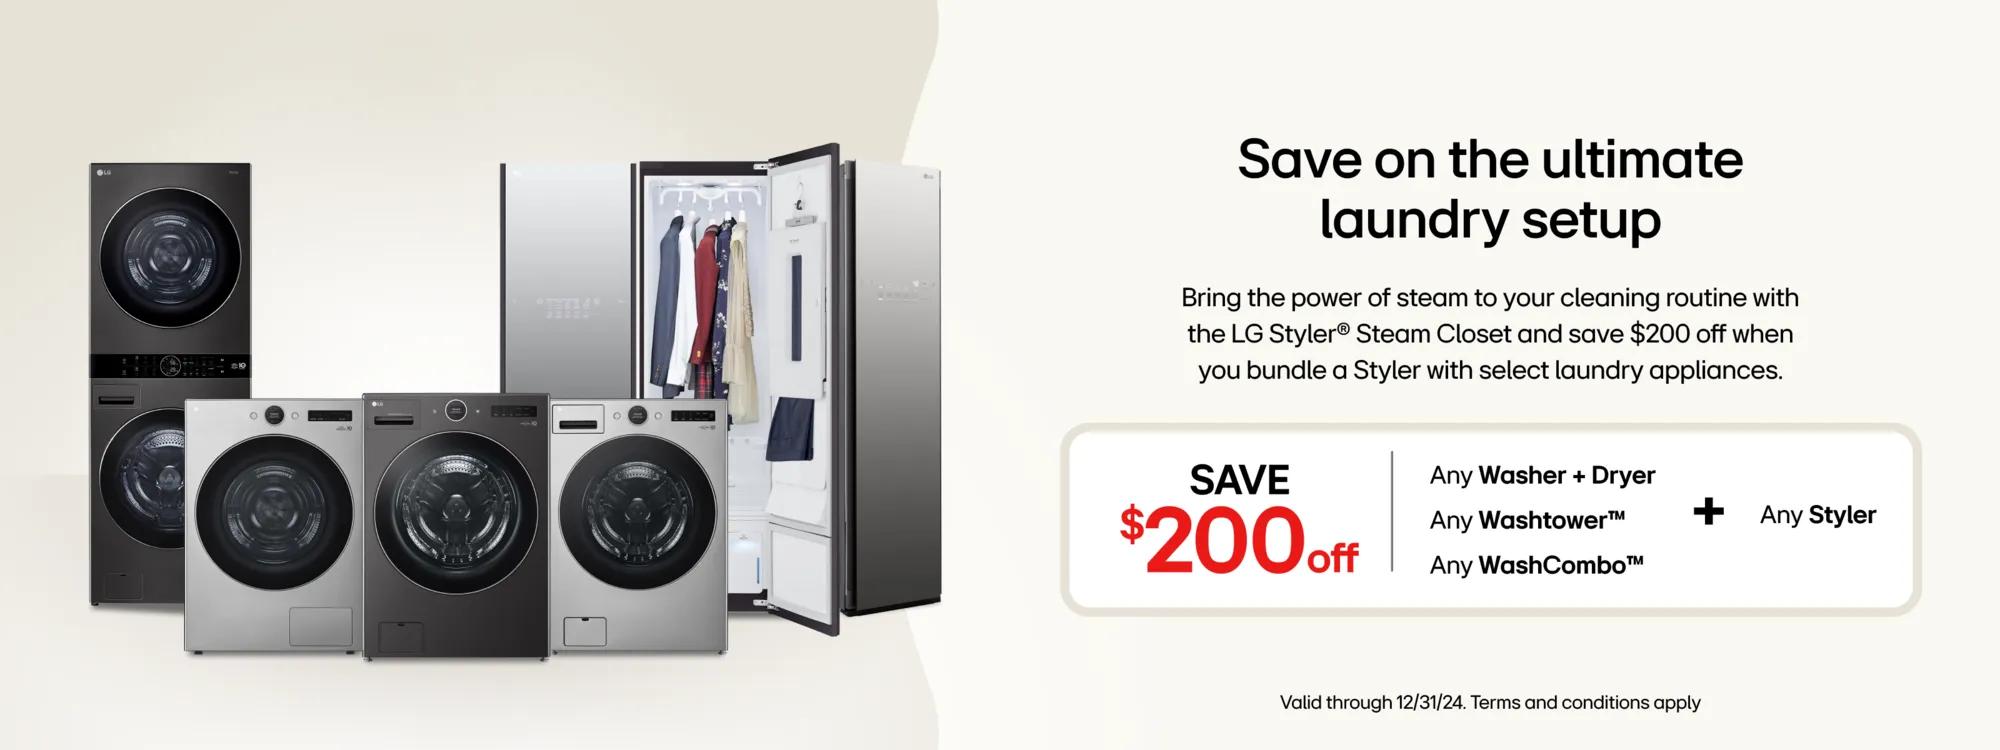 LG Styler + Laundry Bundle Deal - $200 Savings